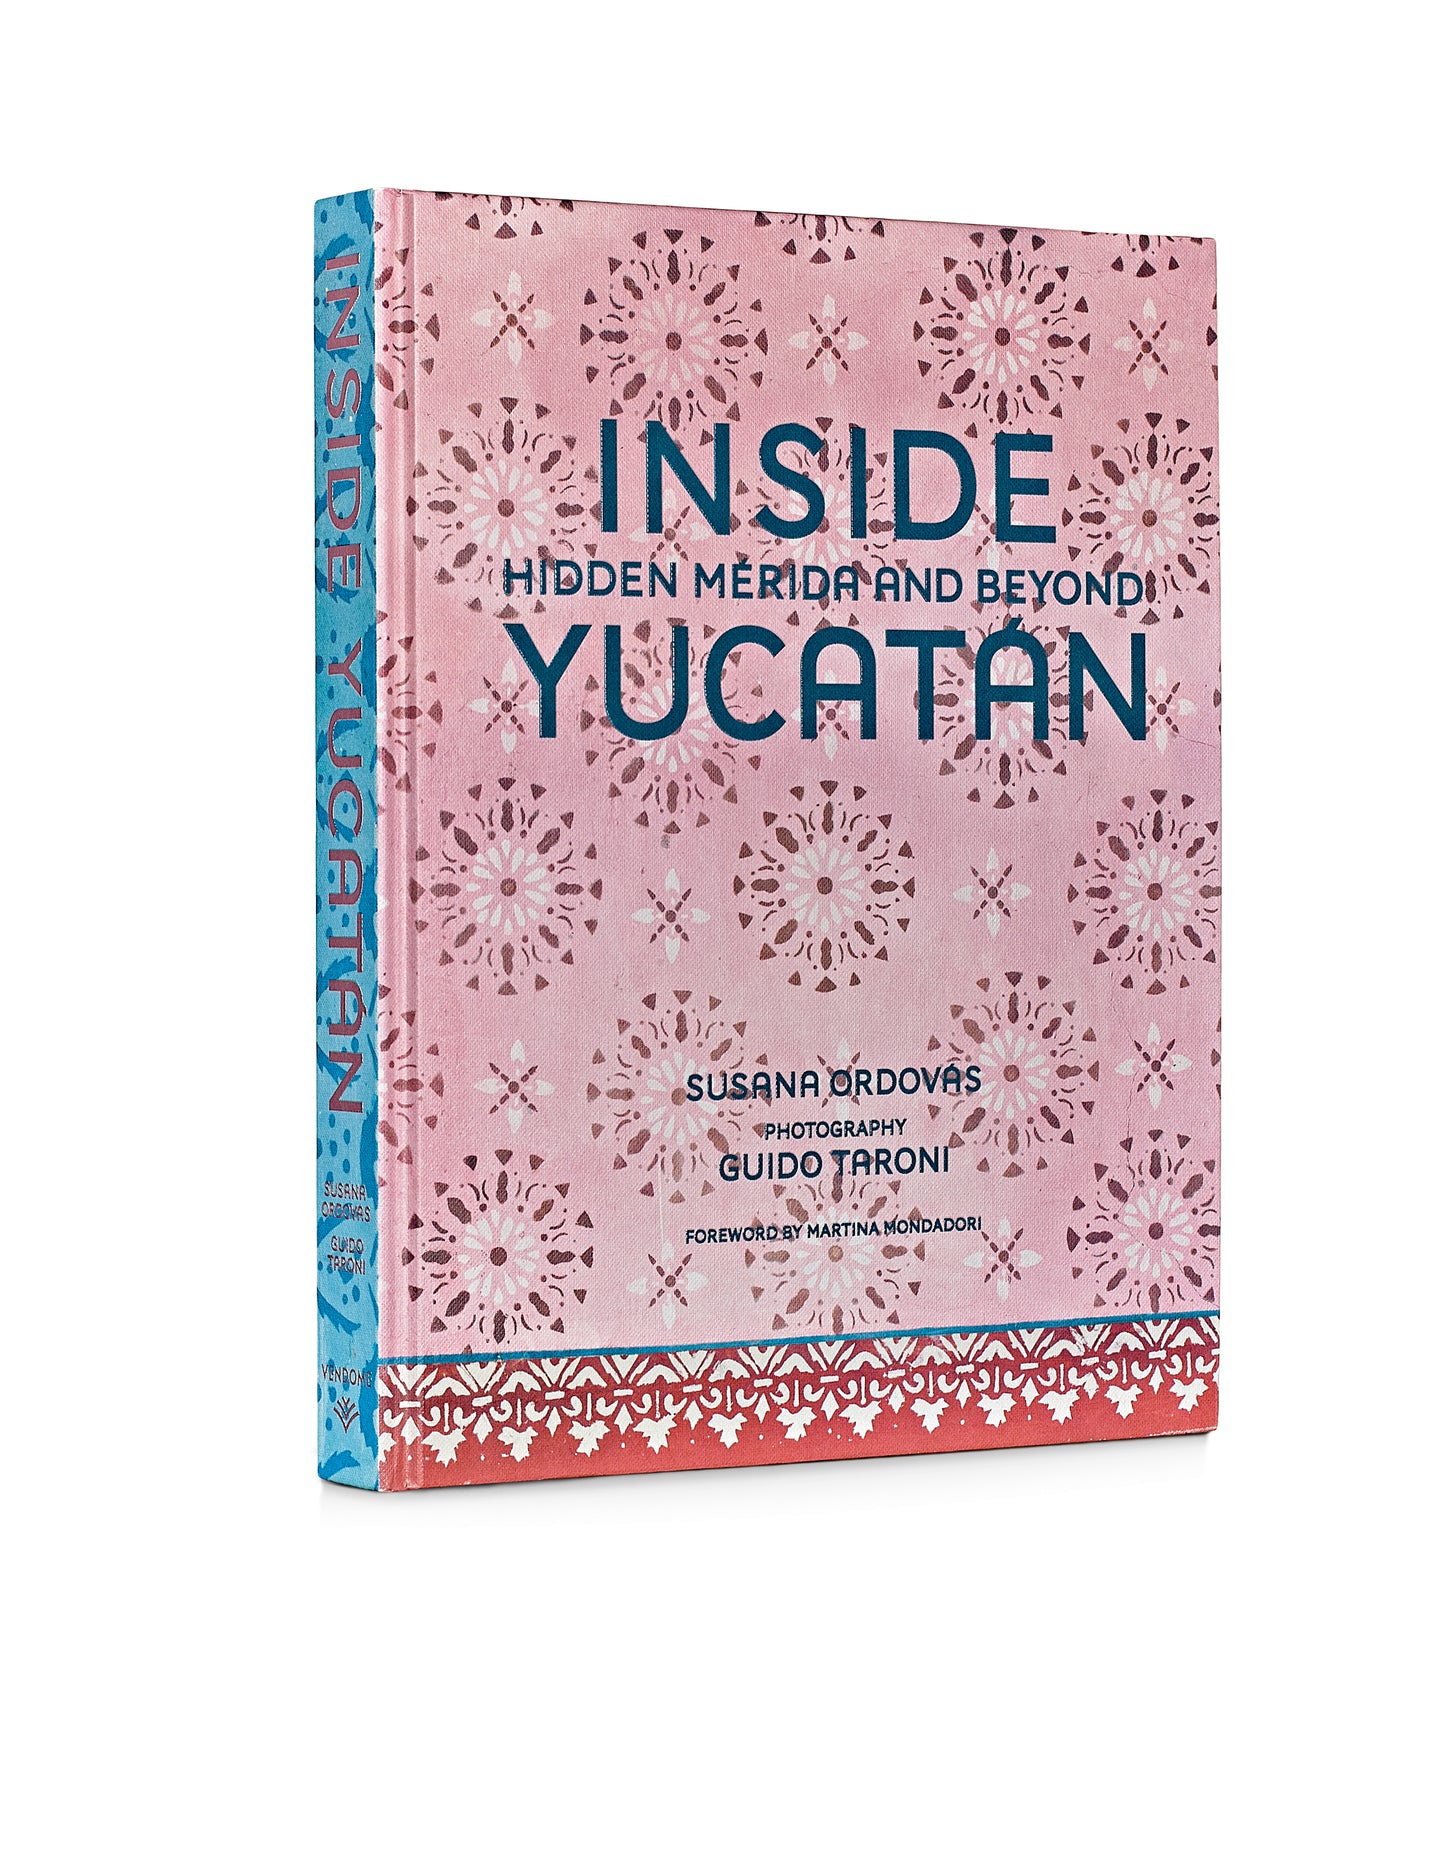 Inside Yucatán: Hidden Mérida and Beyond - Signature Edition